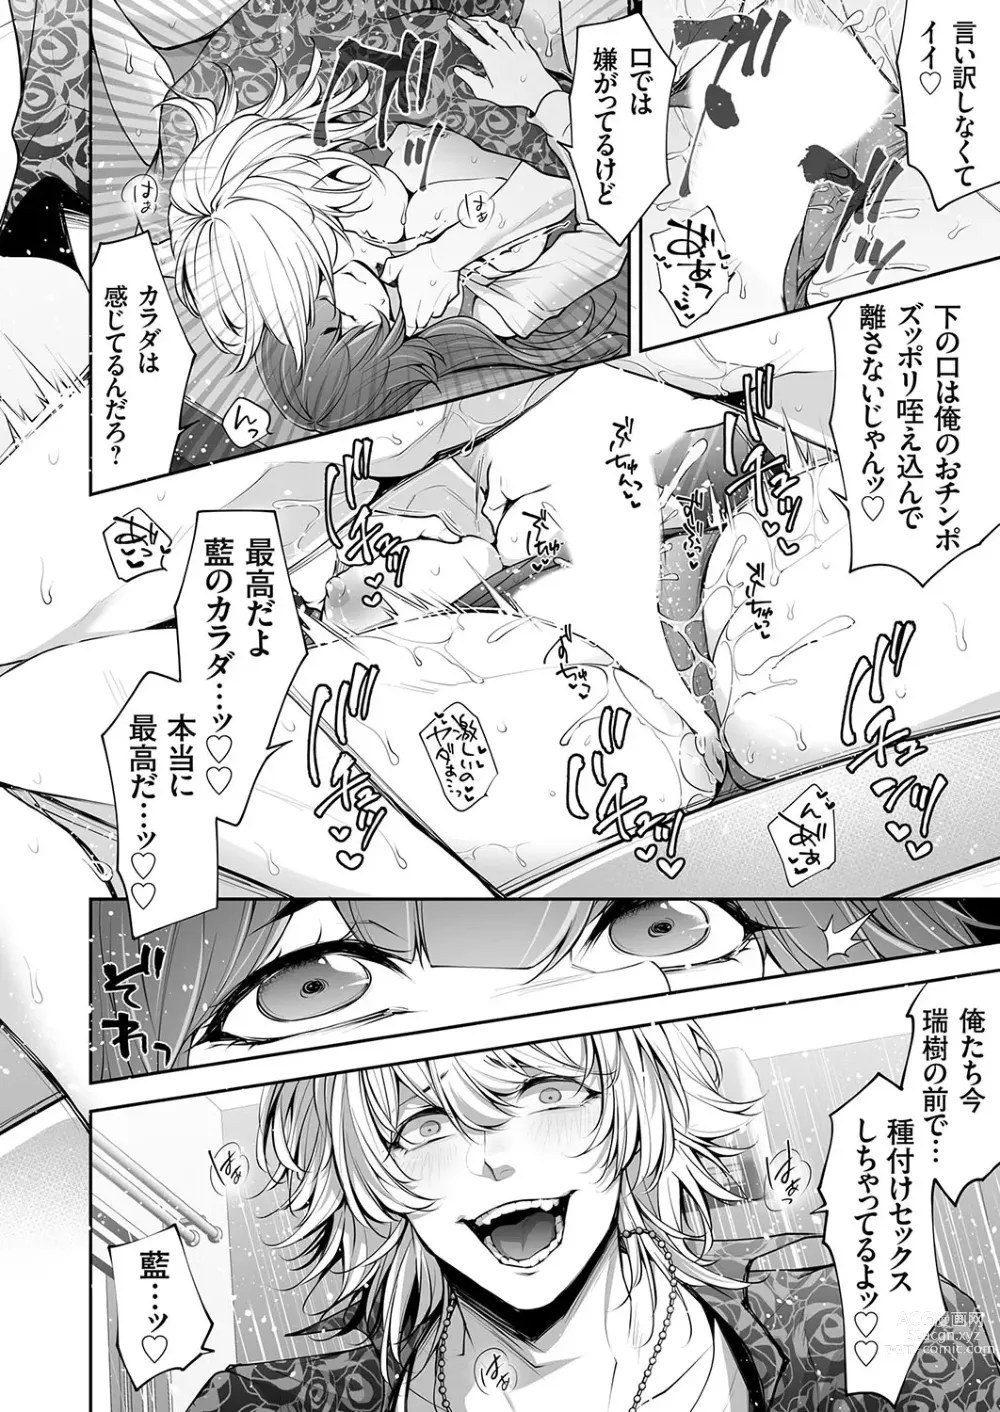 Page 175 of manga COMIC Magnum Vol. 175